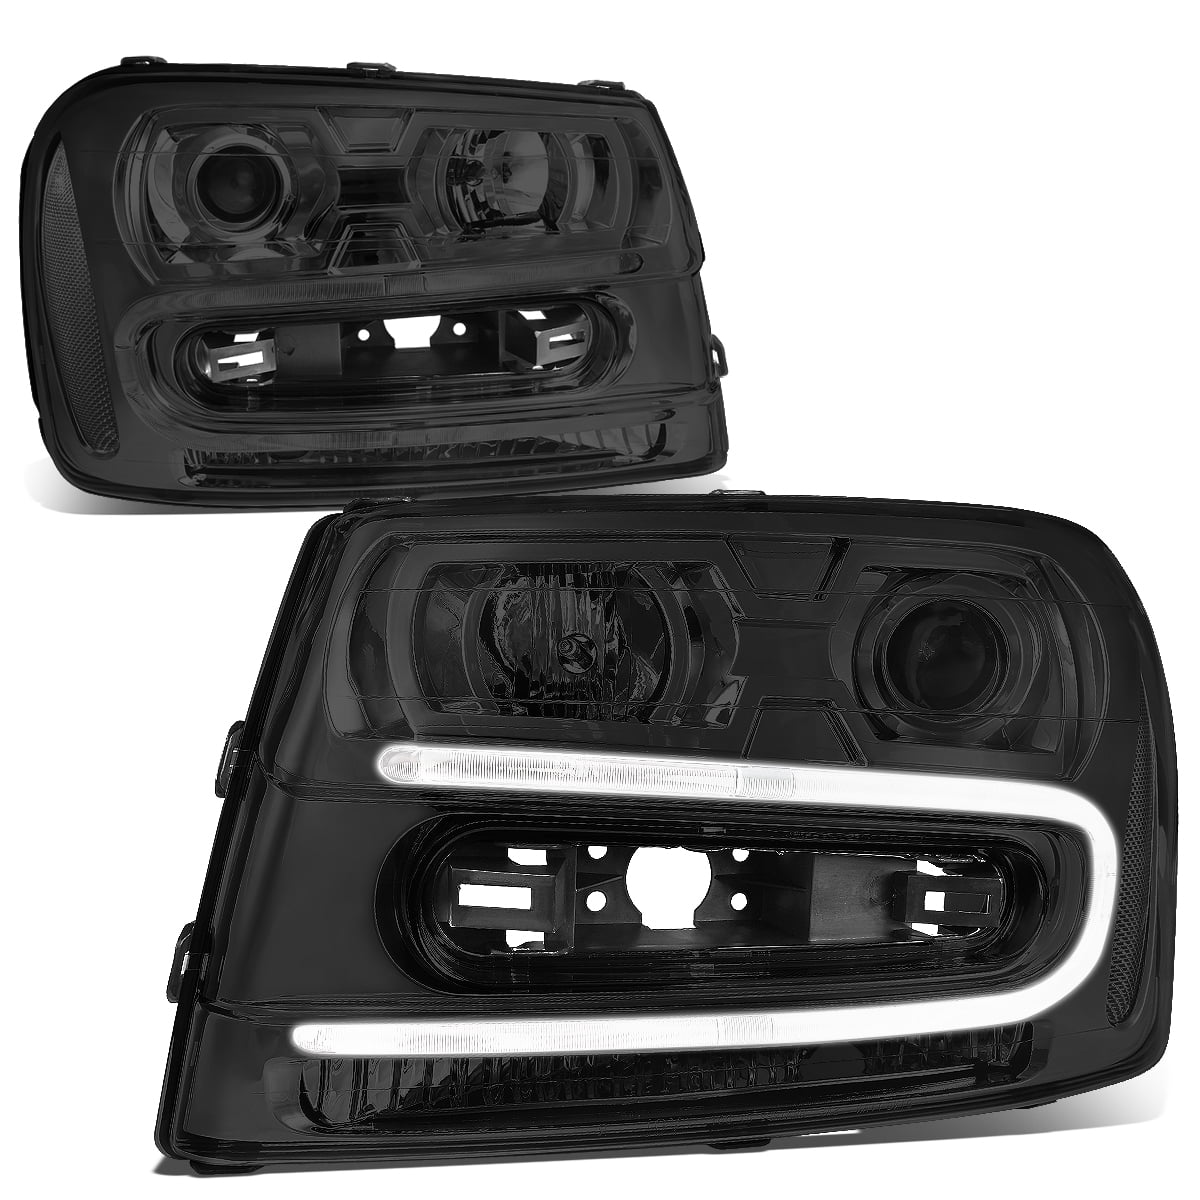 Stereo Install Dash Kit Chevy Trailblazer 02 03 04 05 06 07 08 09 